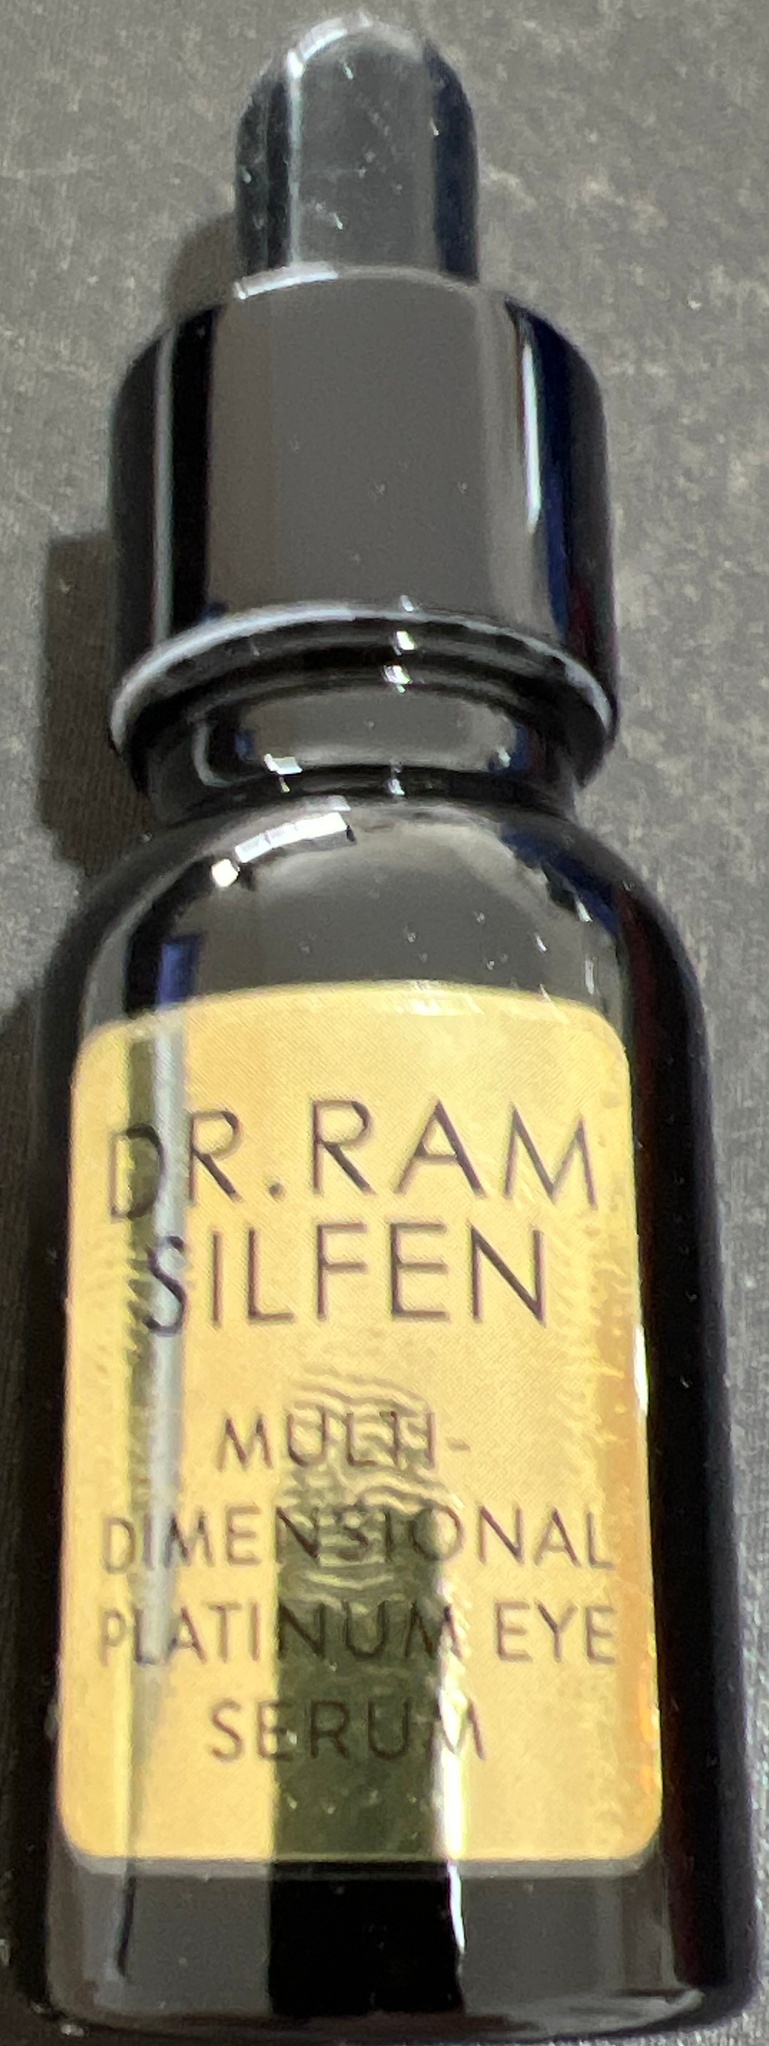 Dr. Ram Silfen Multi Dimensional Platinum Eye Serum